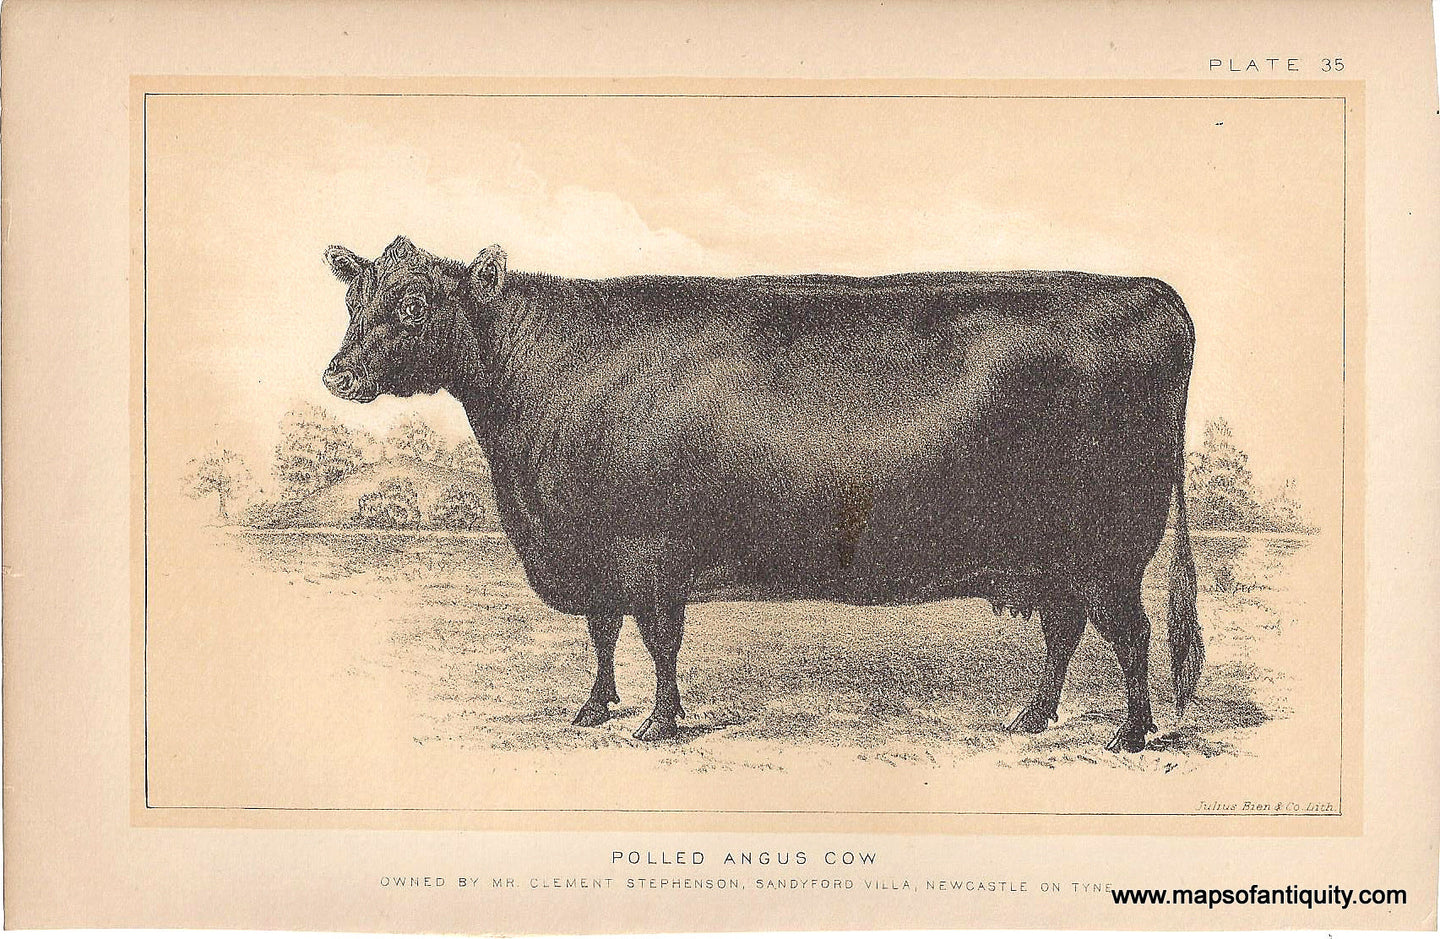 Genuine-Antique-Print-Polled-Angus-Cow-1888-Julius-Bien-Co-Maps-Of-Antiquity